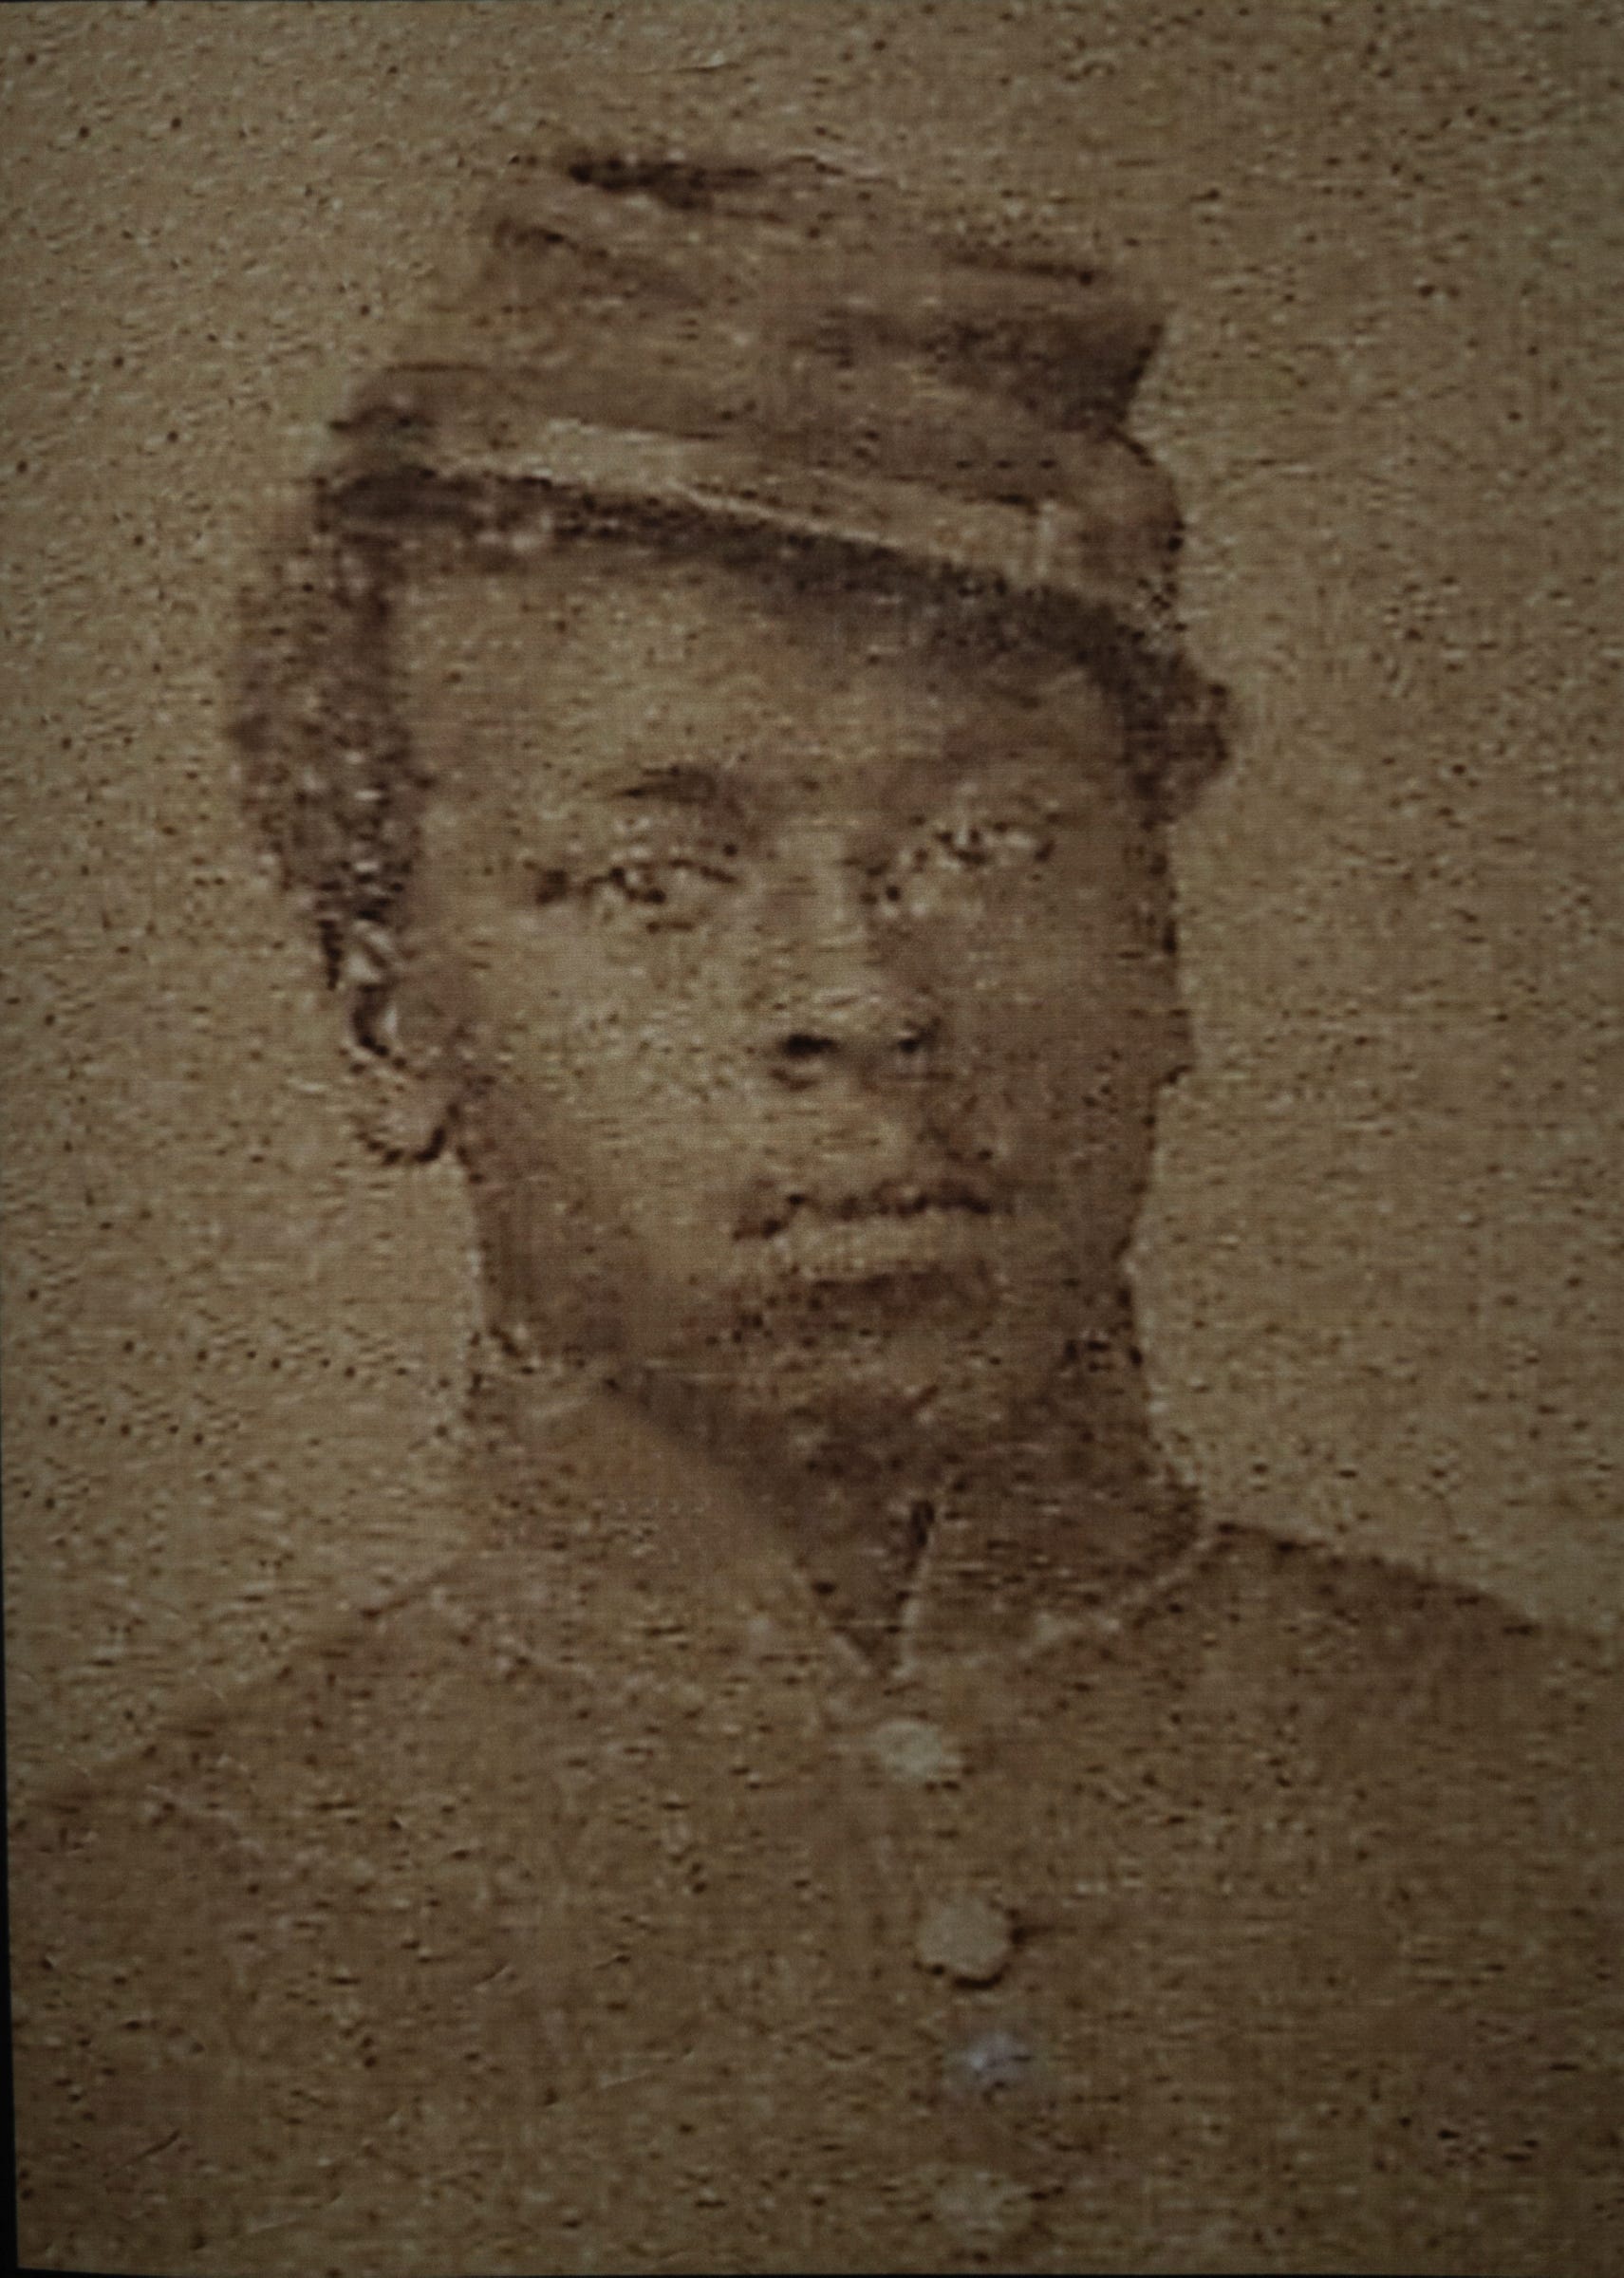 2023 : Black Civil War Solder Receives Headstone